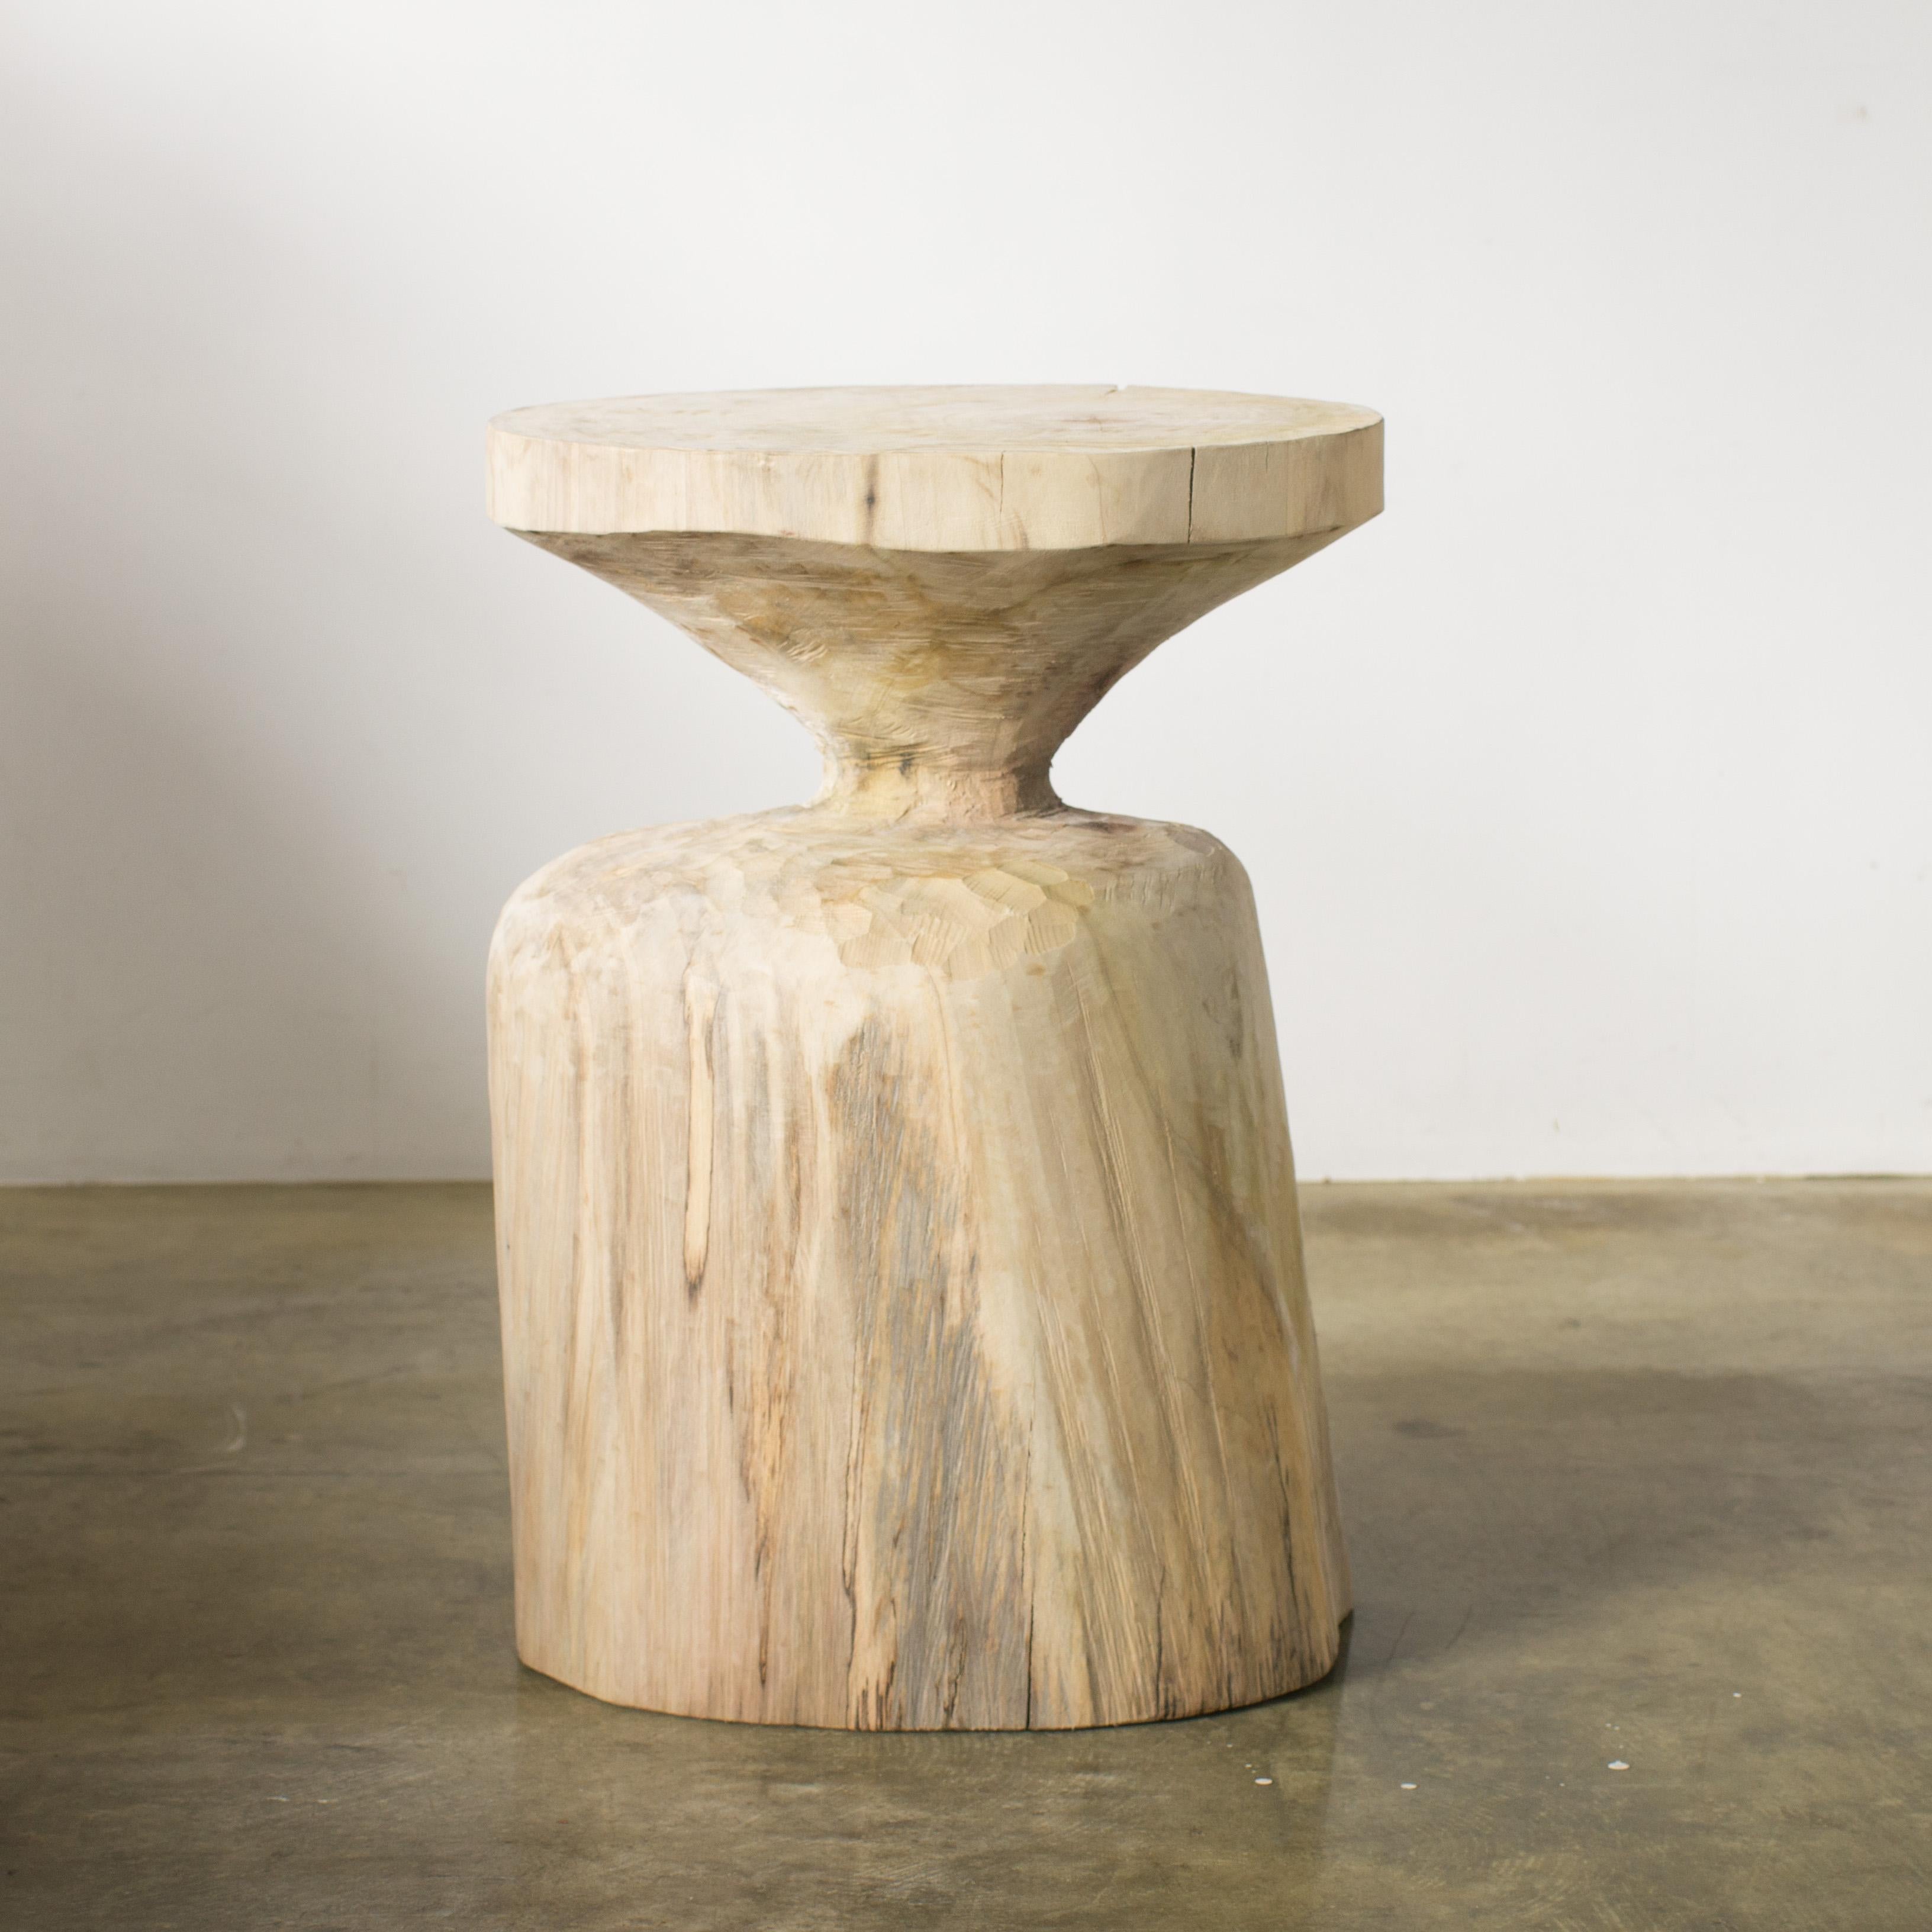 Hand-Carved Hiroyuki Nishimura and Zogei Furniture Sculptural Wood Stool9-04 Tribal Glamping